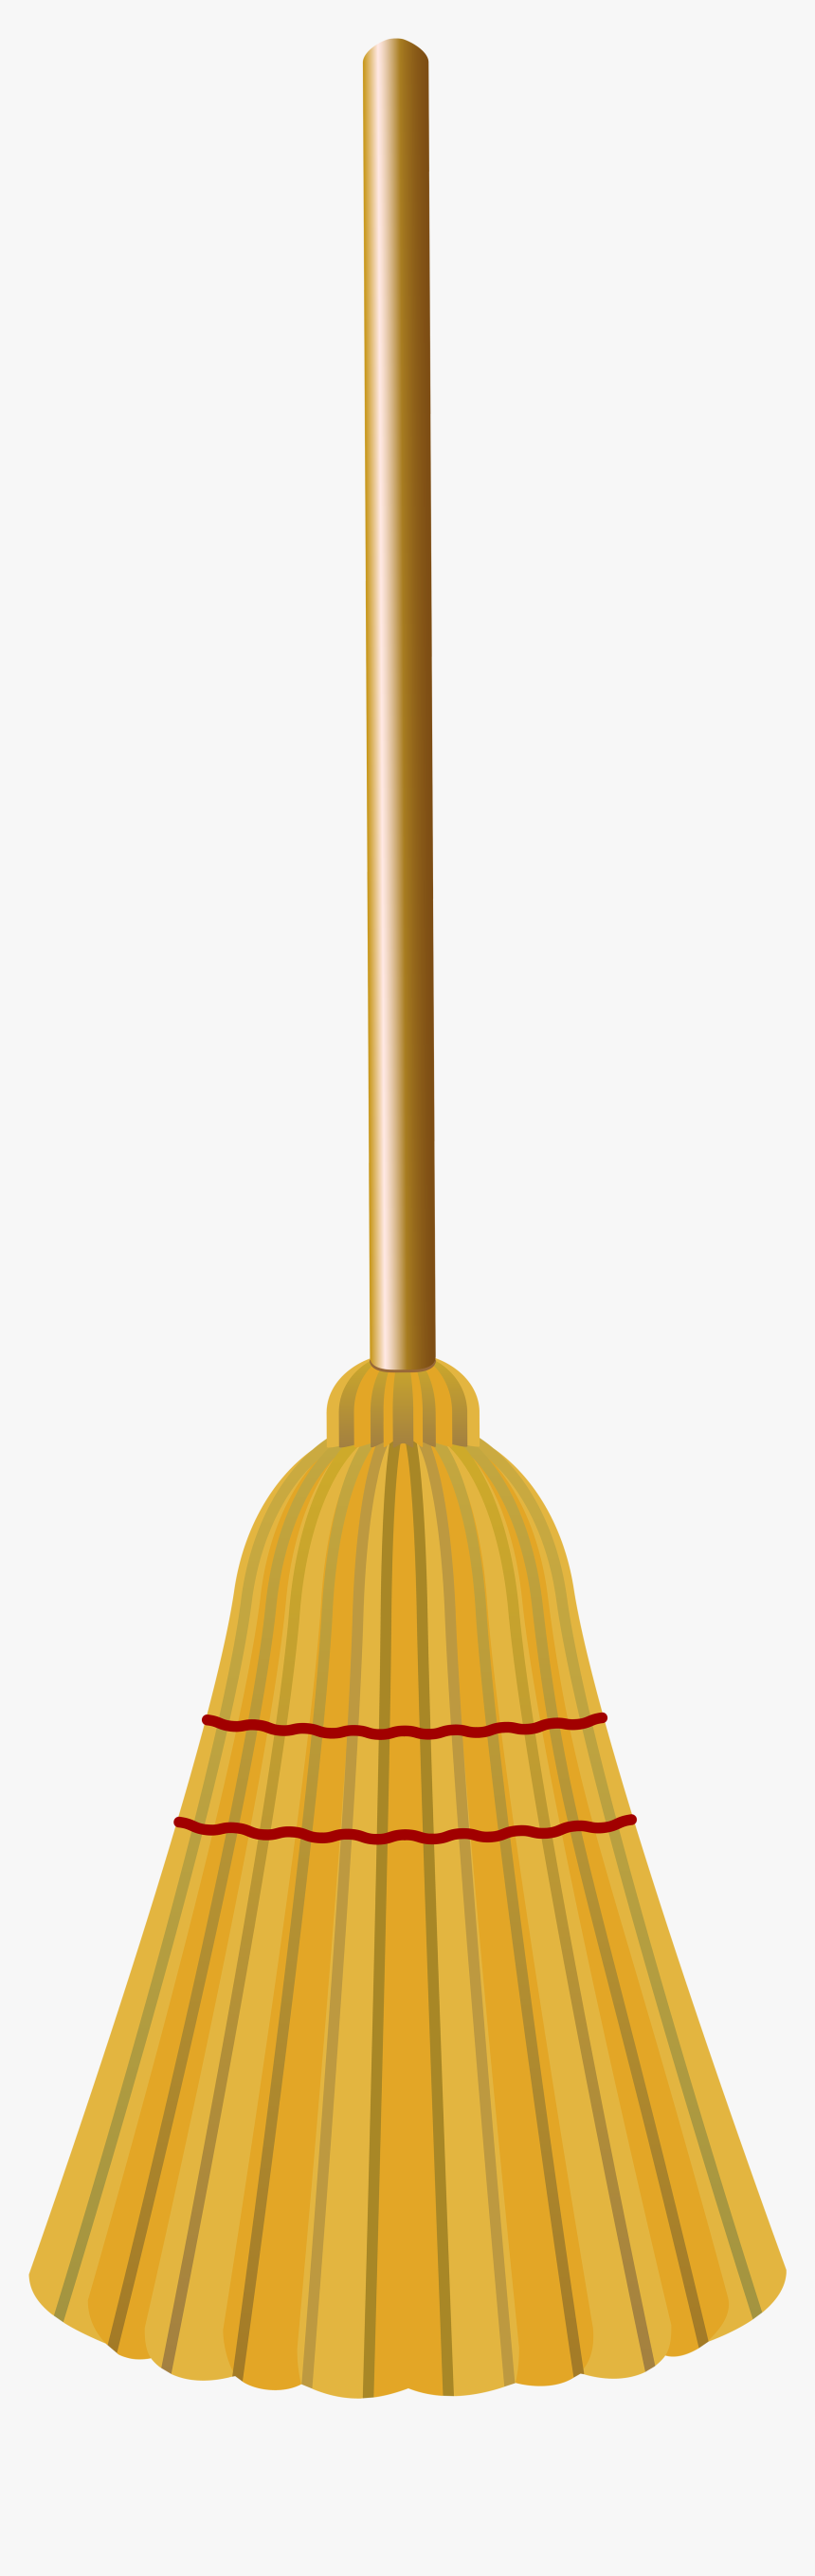 Broom Png Clip Art Image - Broom Clipart Transparent, Png Download, Free Download